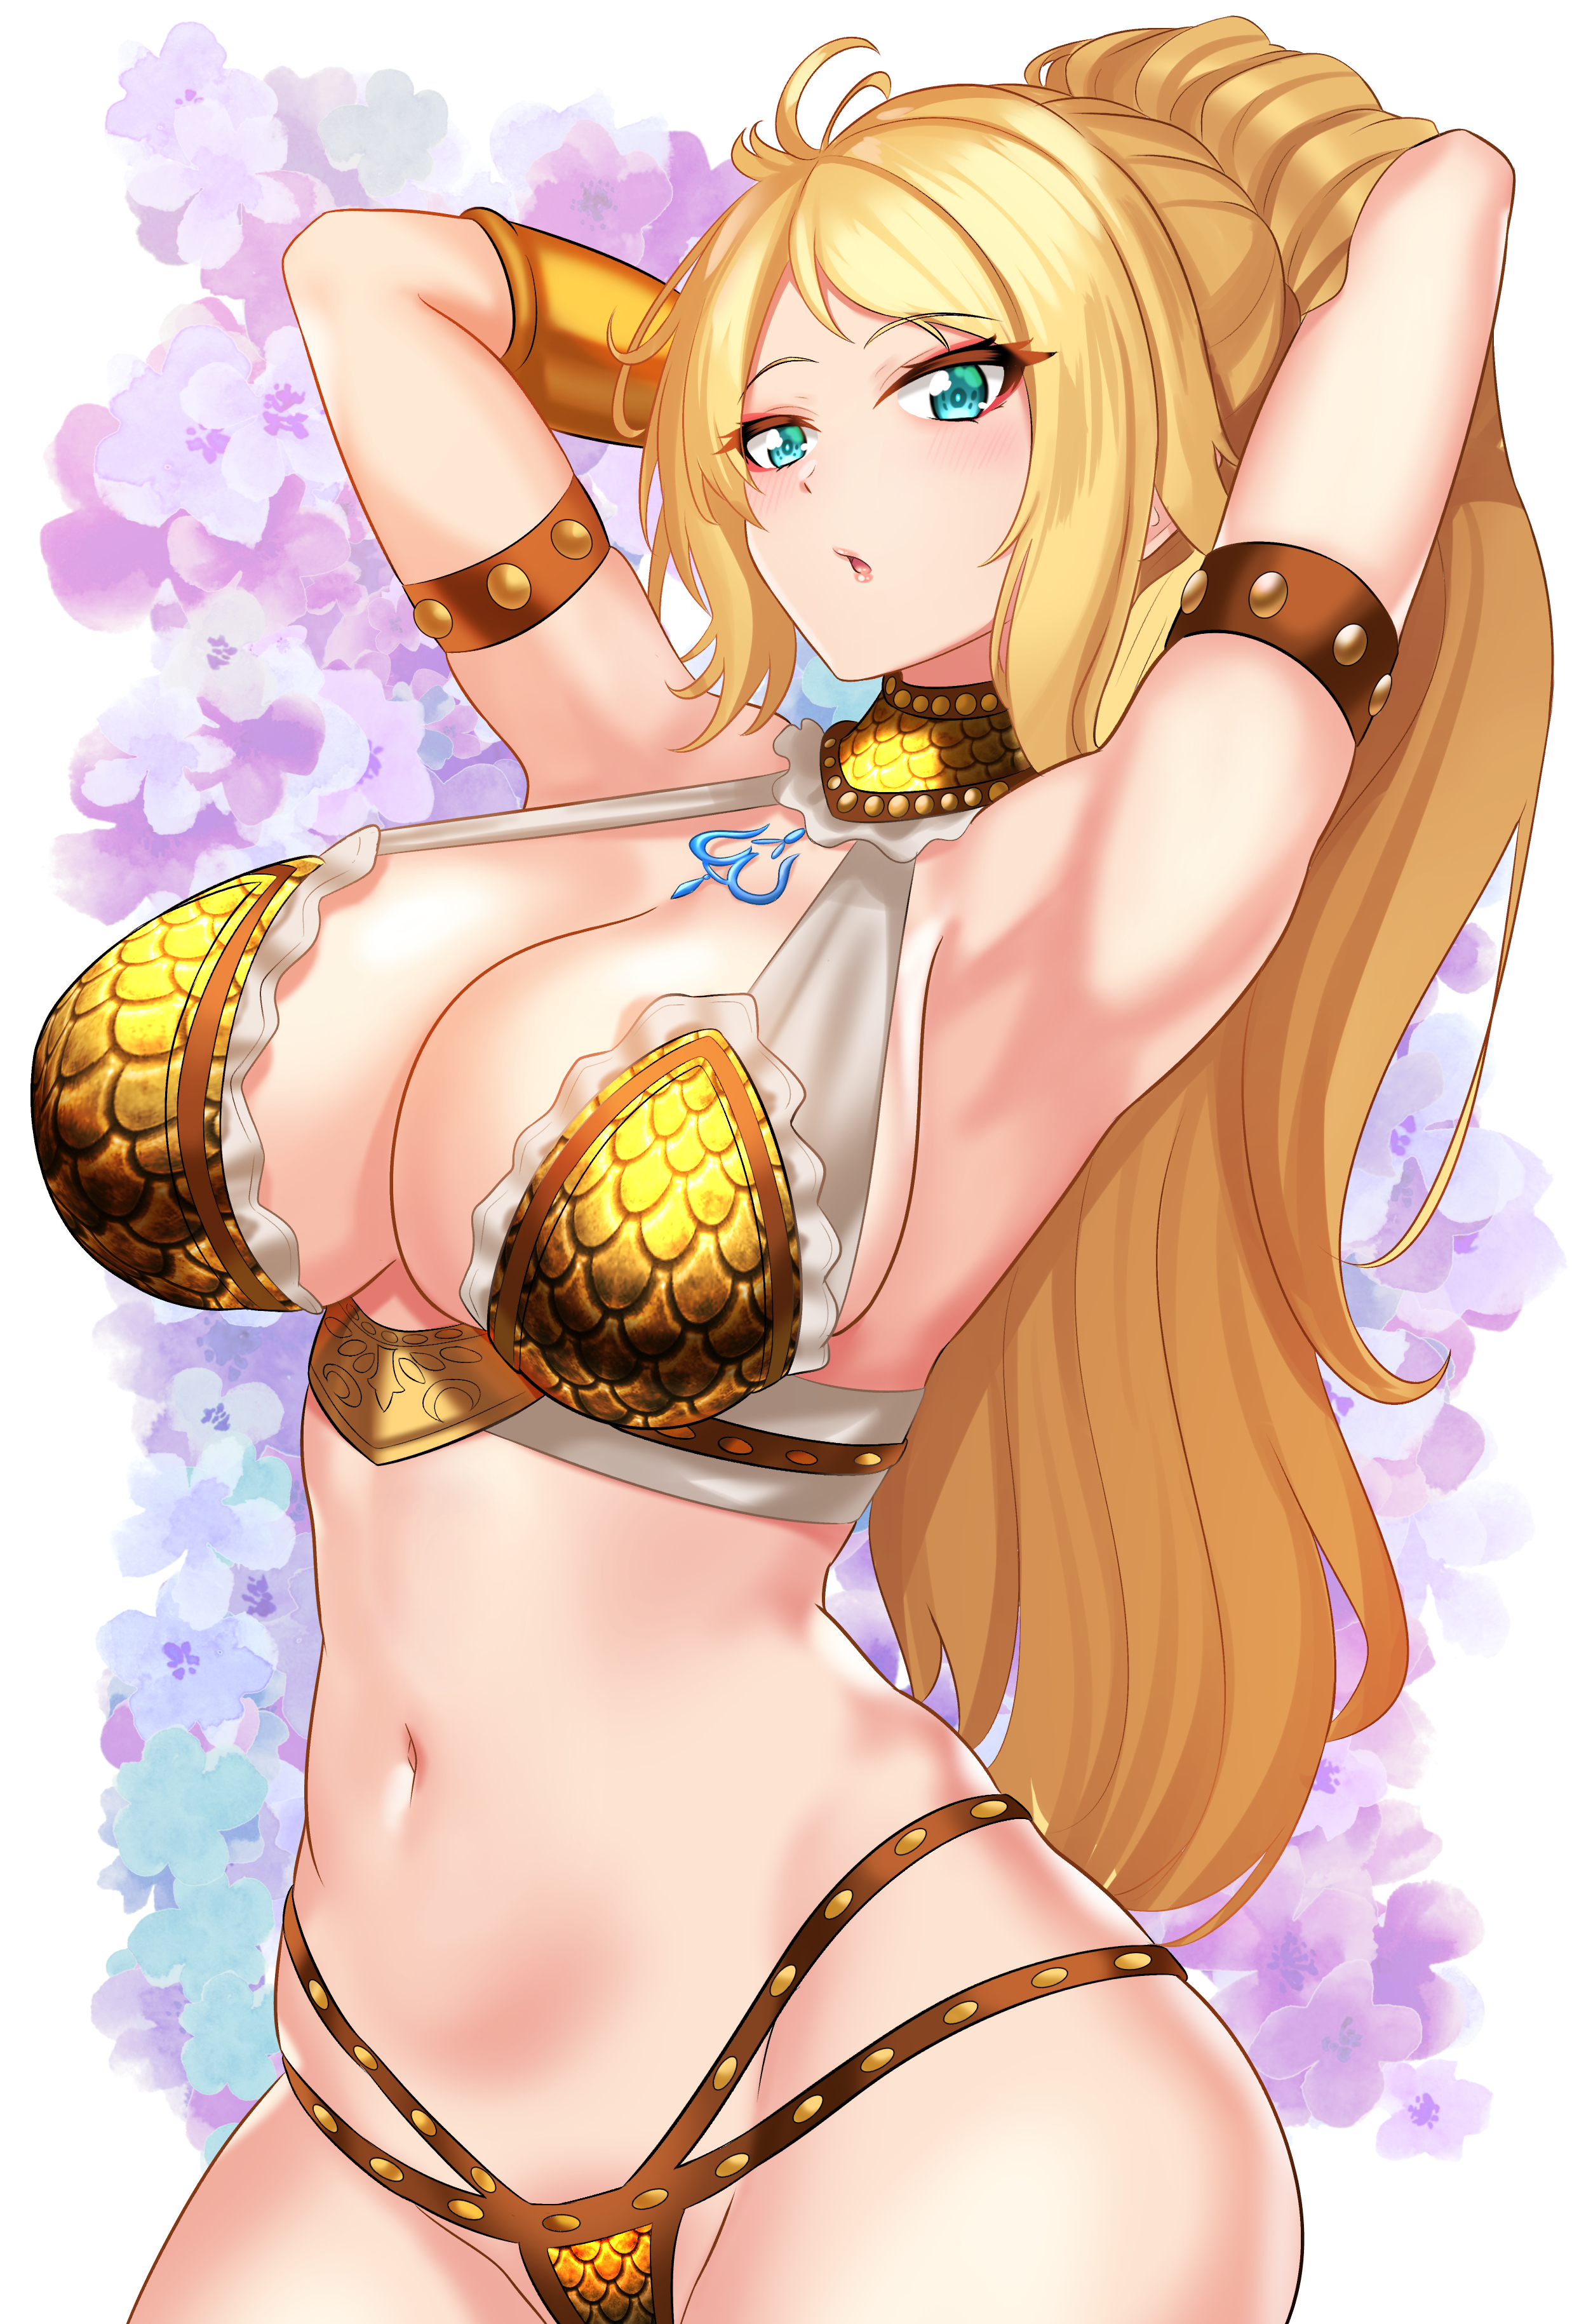 Anime 2475x3659 Nez-Box bikini cleavage armpits bikini armor blonde big boobs anime anime girls